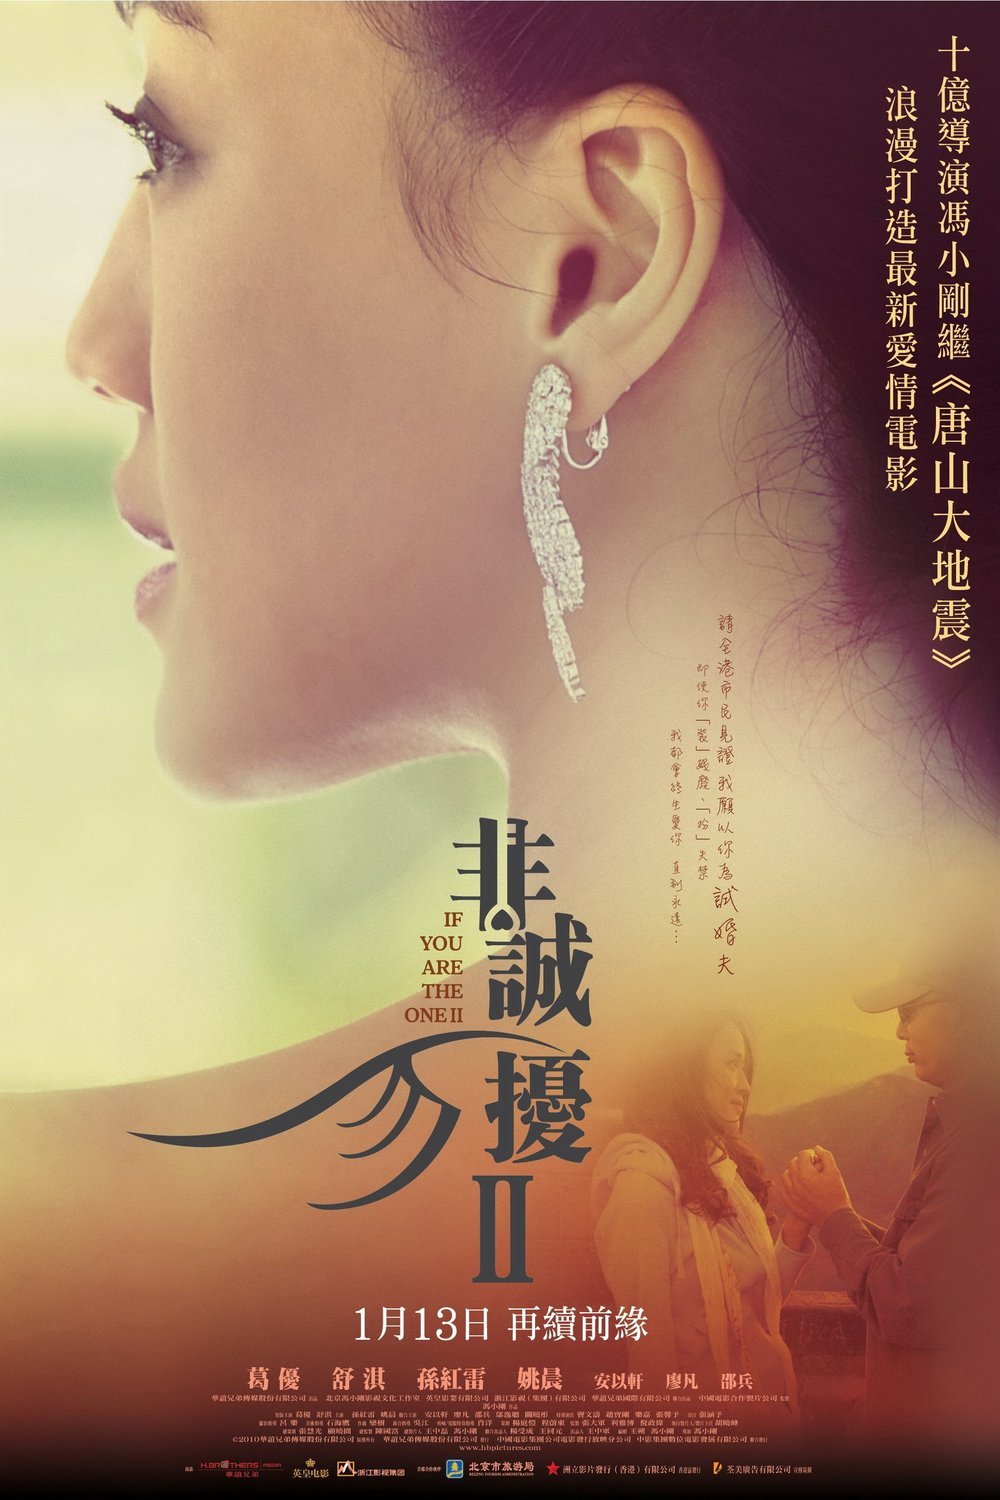 L'affiche originale du film Fei cheng wu rao 2 en mandarin